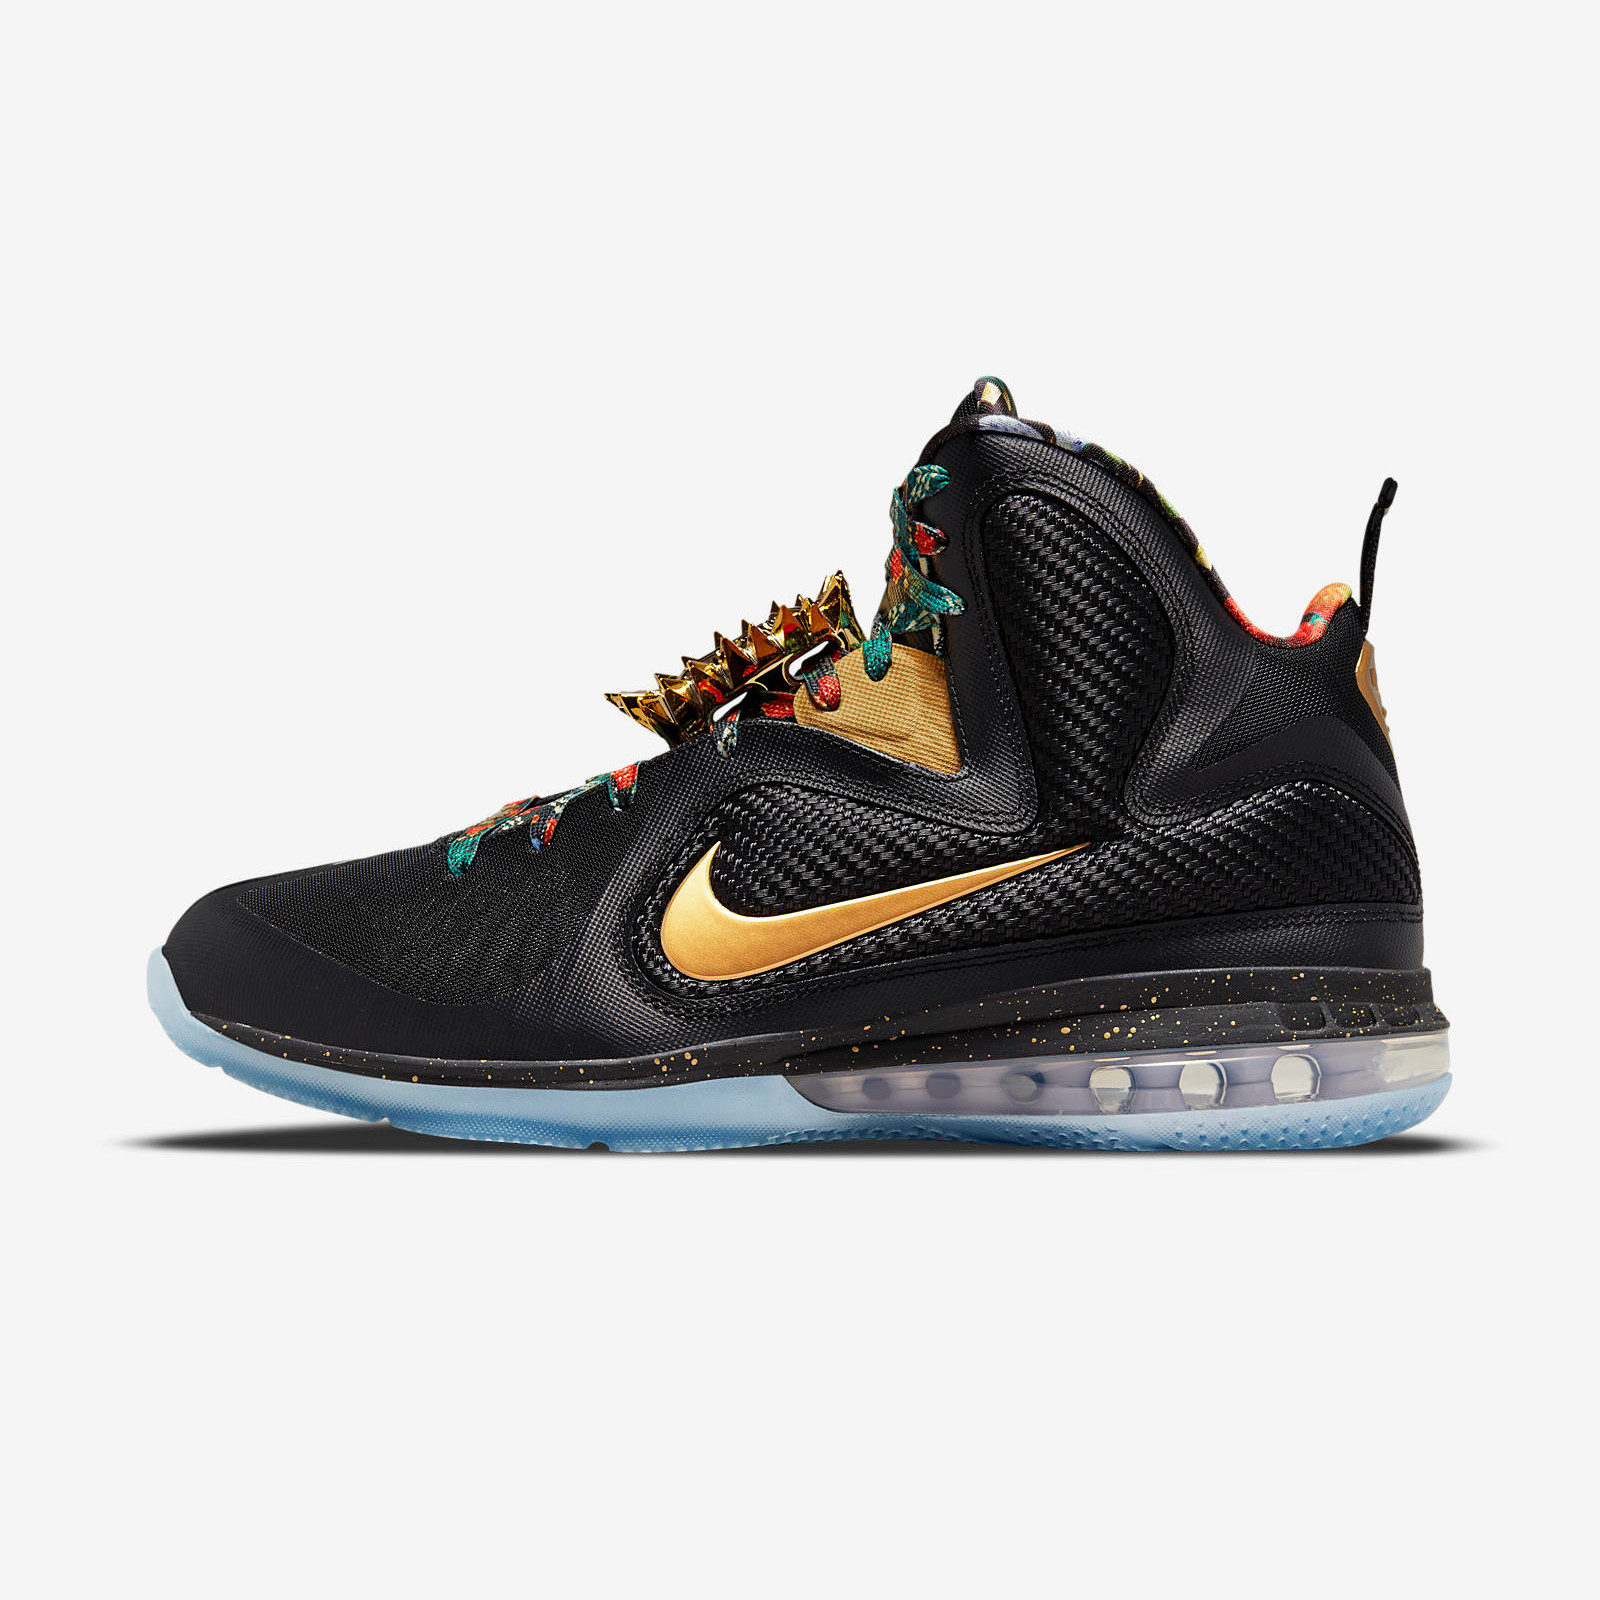 Nike LeBron 9
« Watch The Throne »